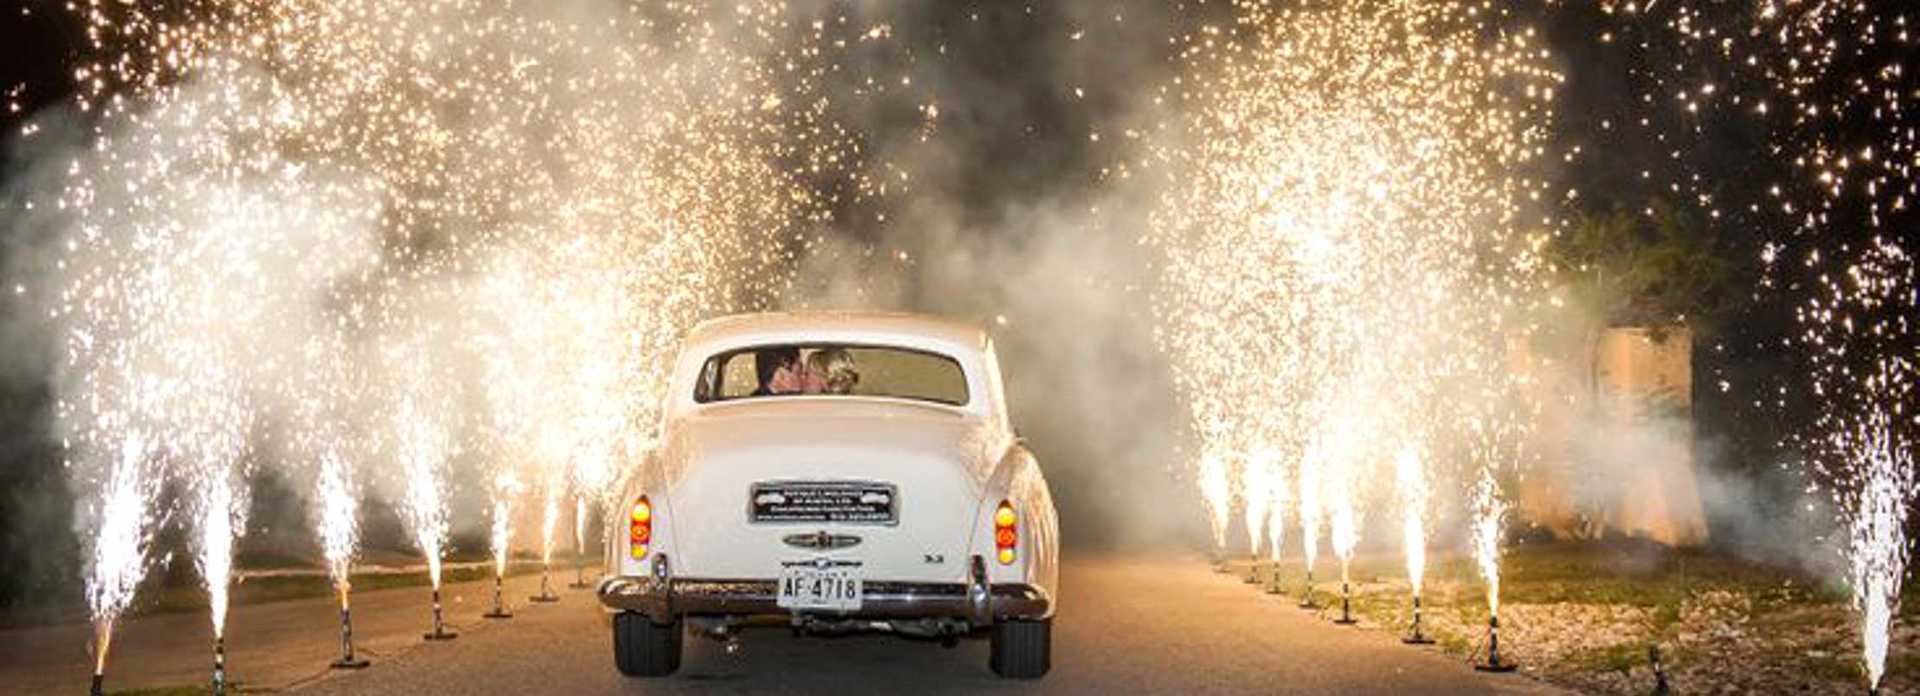 Wedding Fireworks | KCs Fireworks Displays Qld & NSW